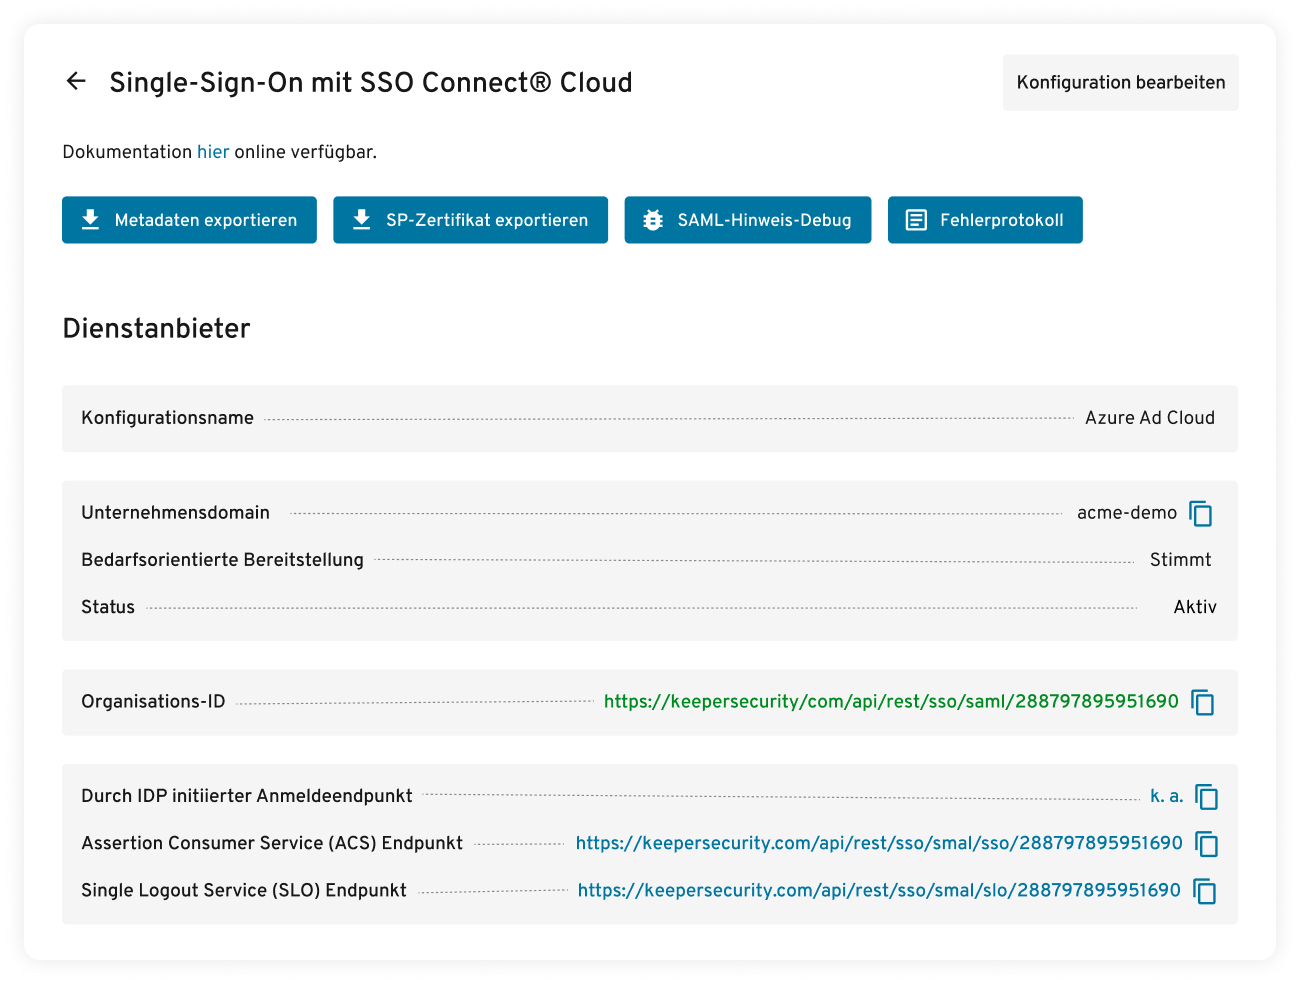 SAML-2.0-Authentifizierung mit SSO Connect Cloud